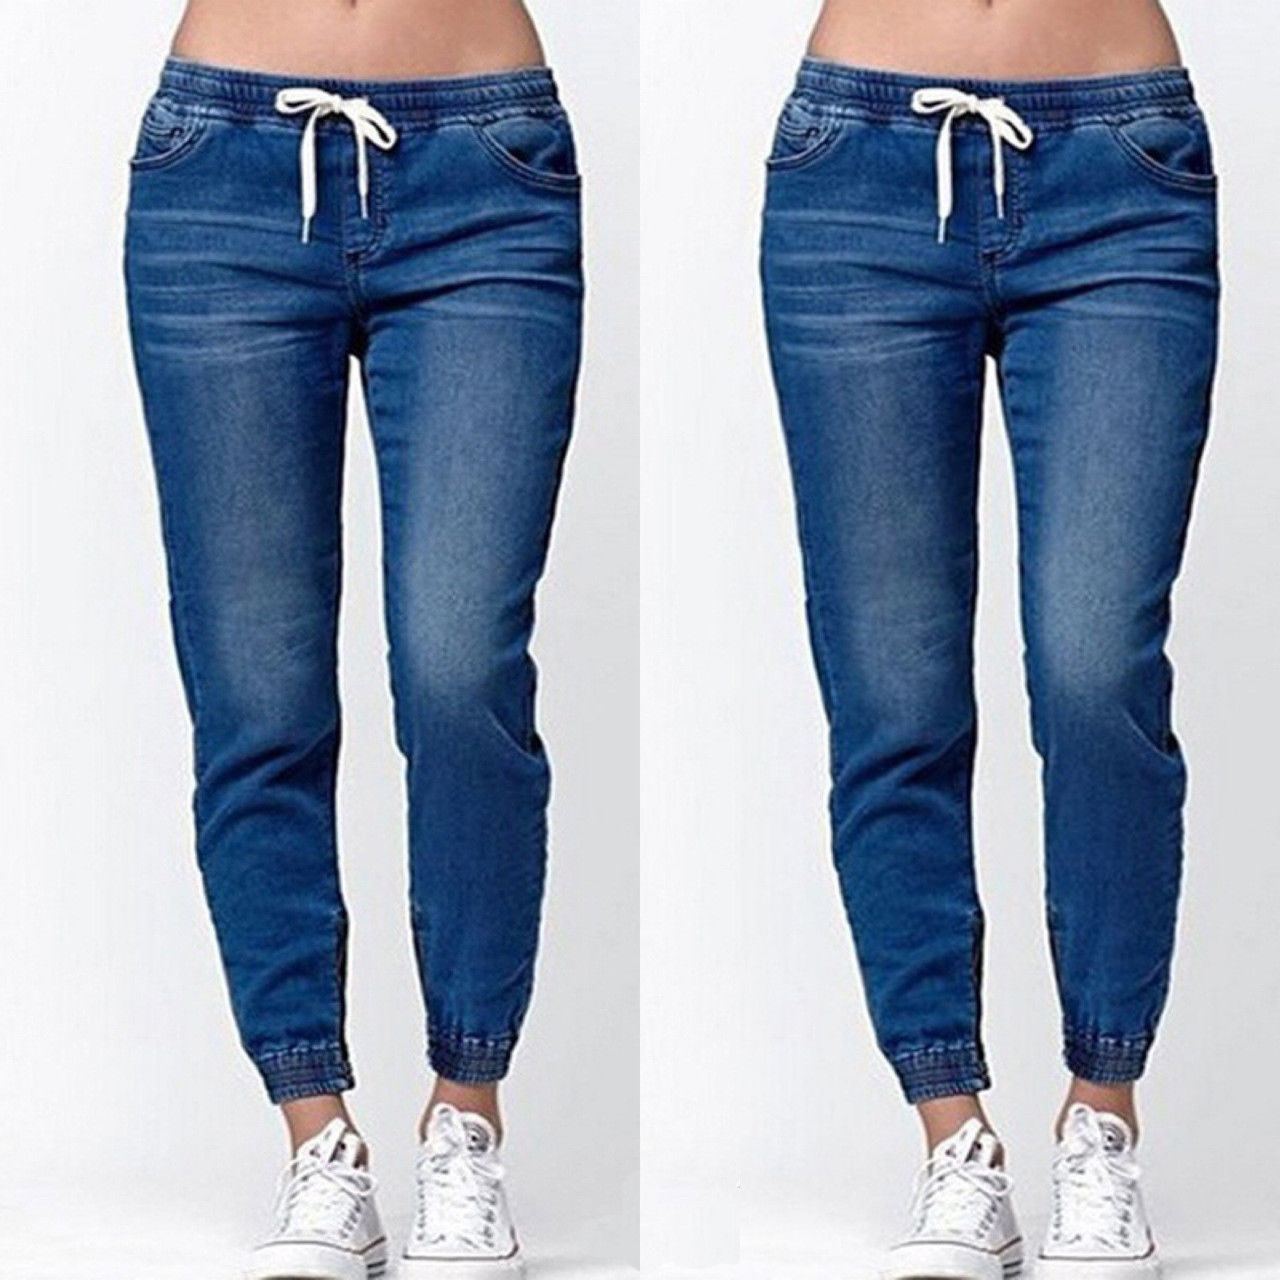 Puloru New Fashion Women Denim Skinny Cut Pencil Pants High Waist Stretch Jeans Trousers Slim drawstring bloomers jeans - image 1 of 5